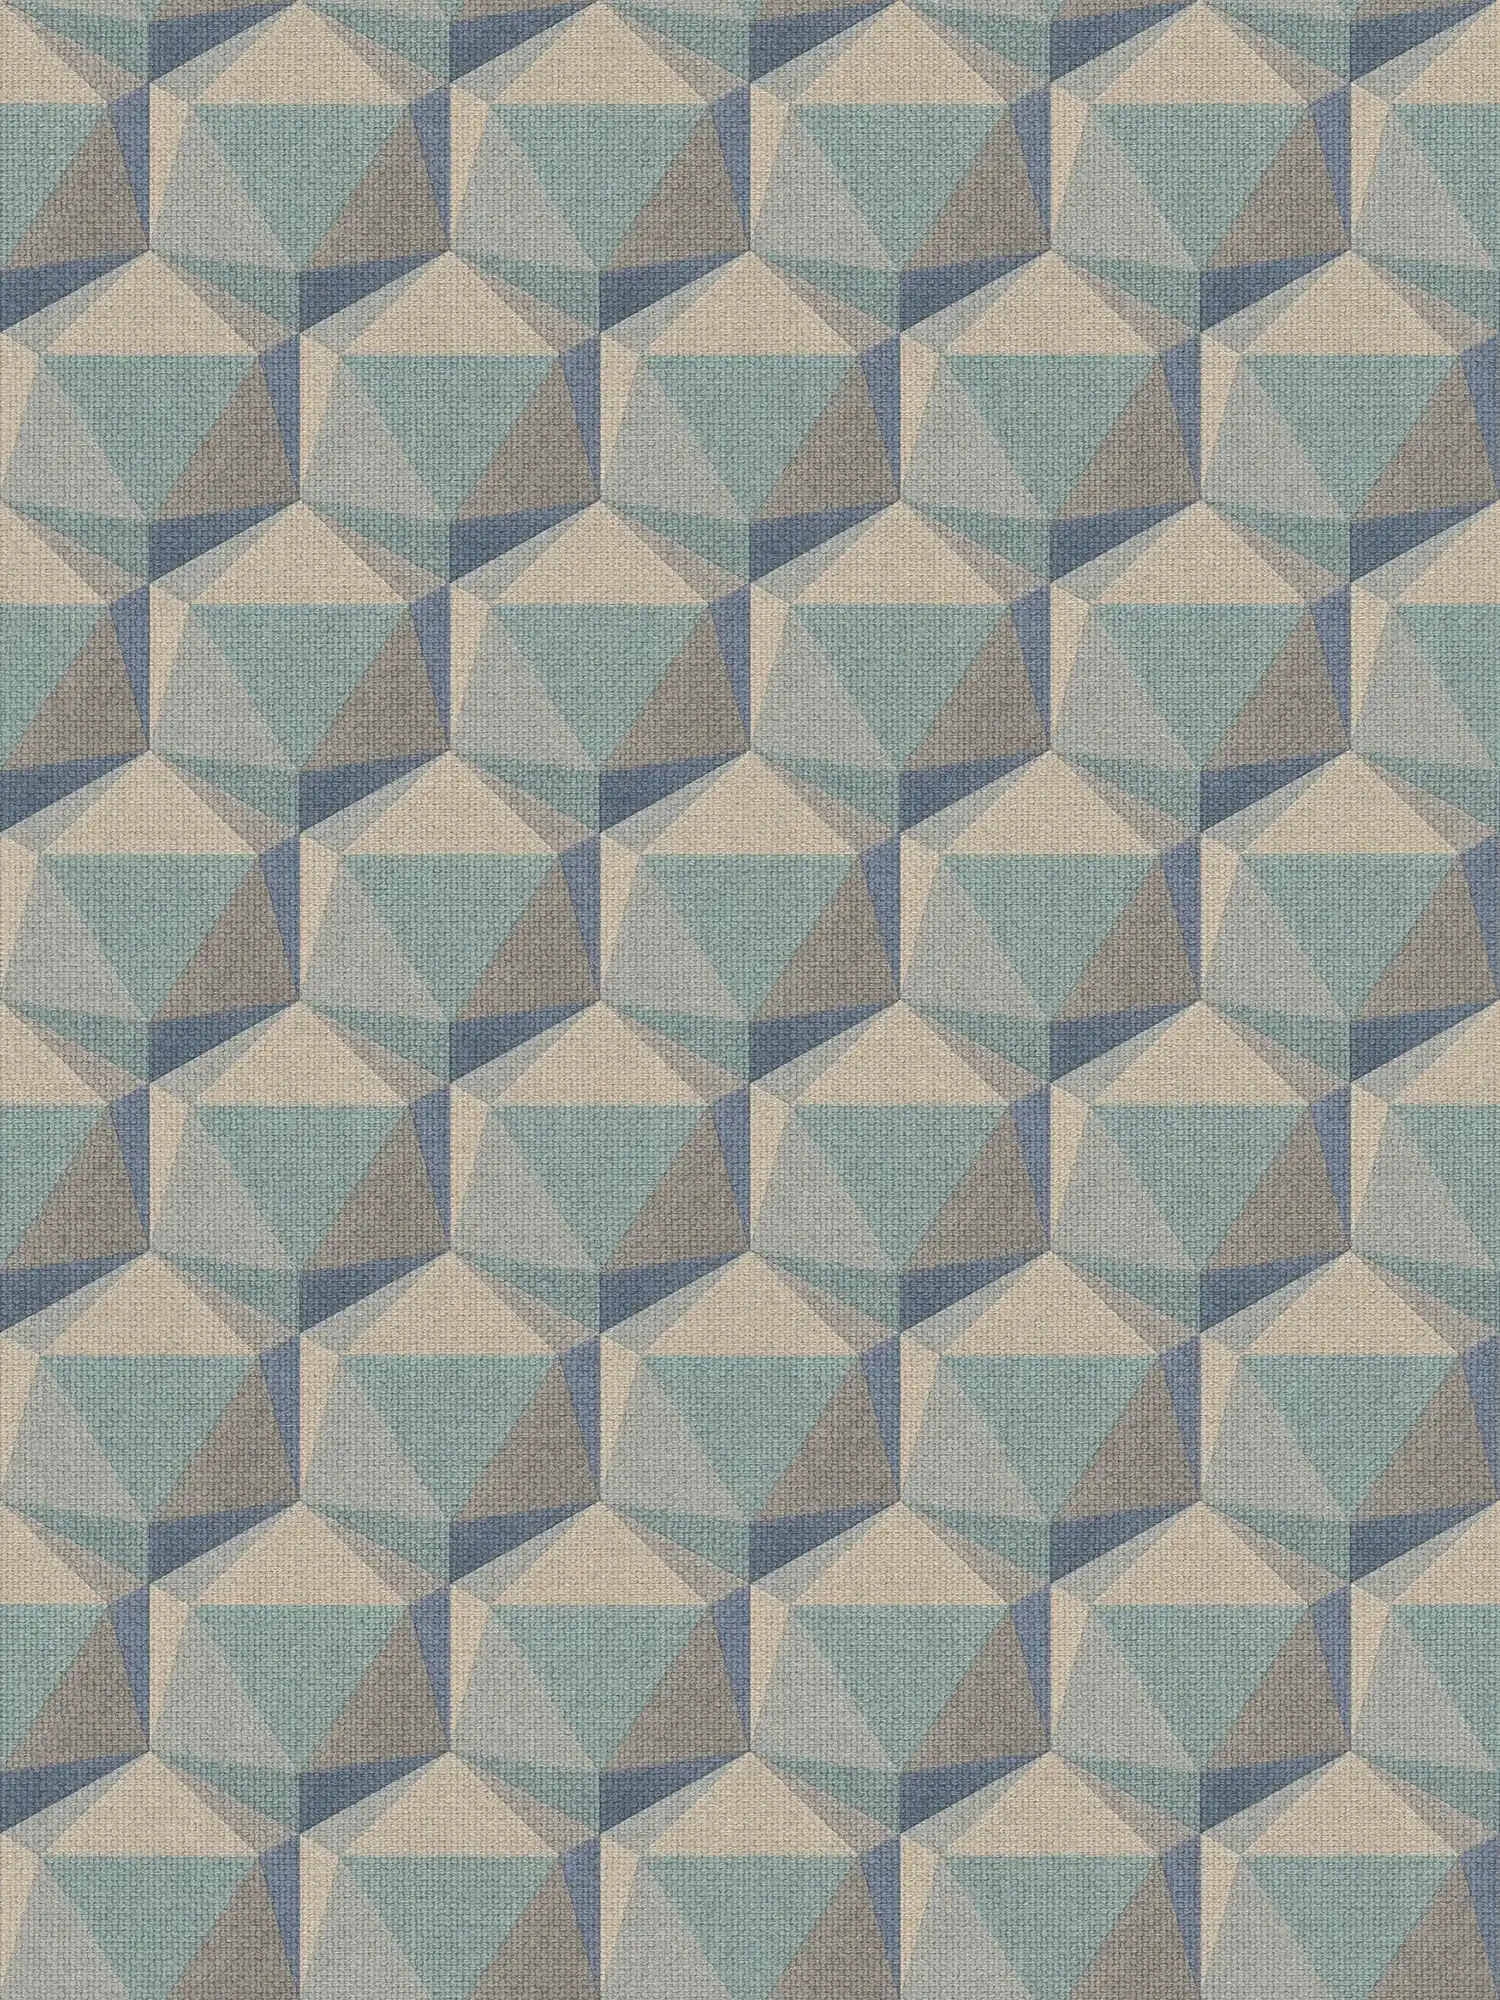         Non-woven wallpaper 3D graphics in retro look - beige, blue, green
    